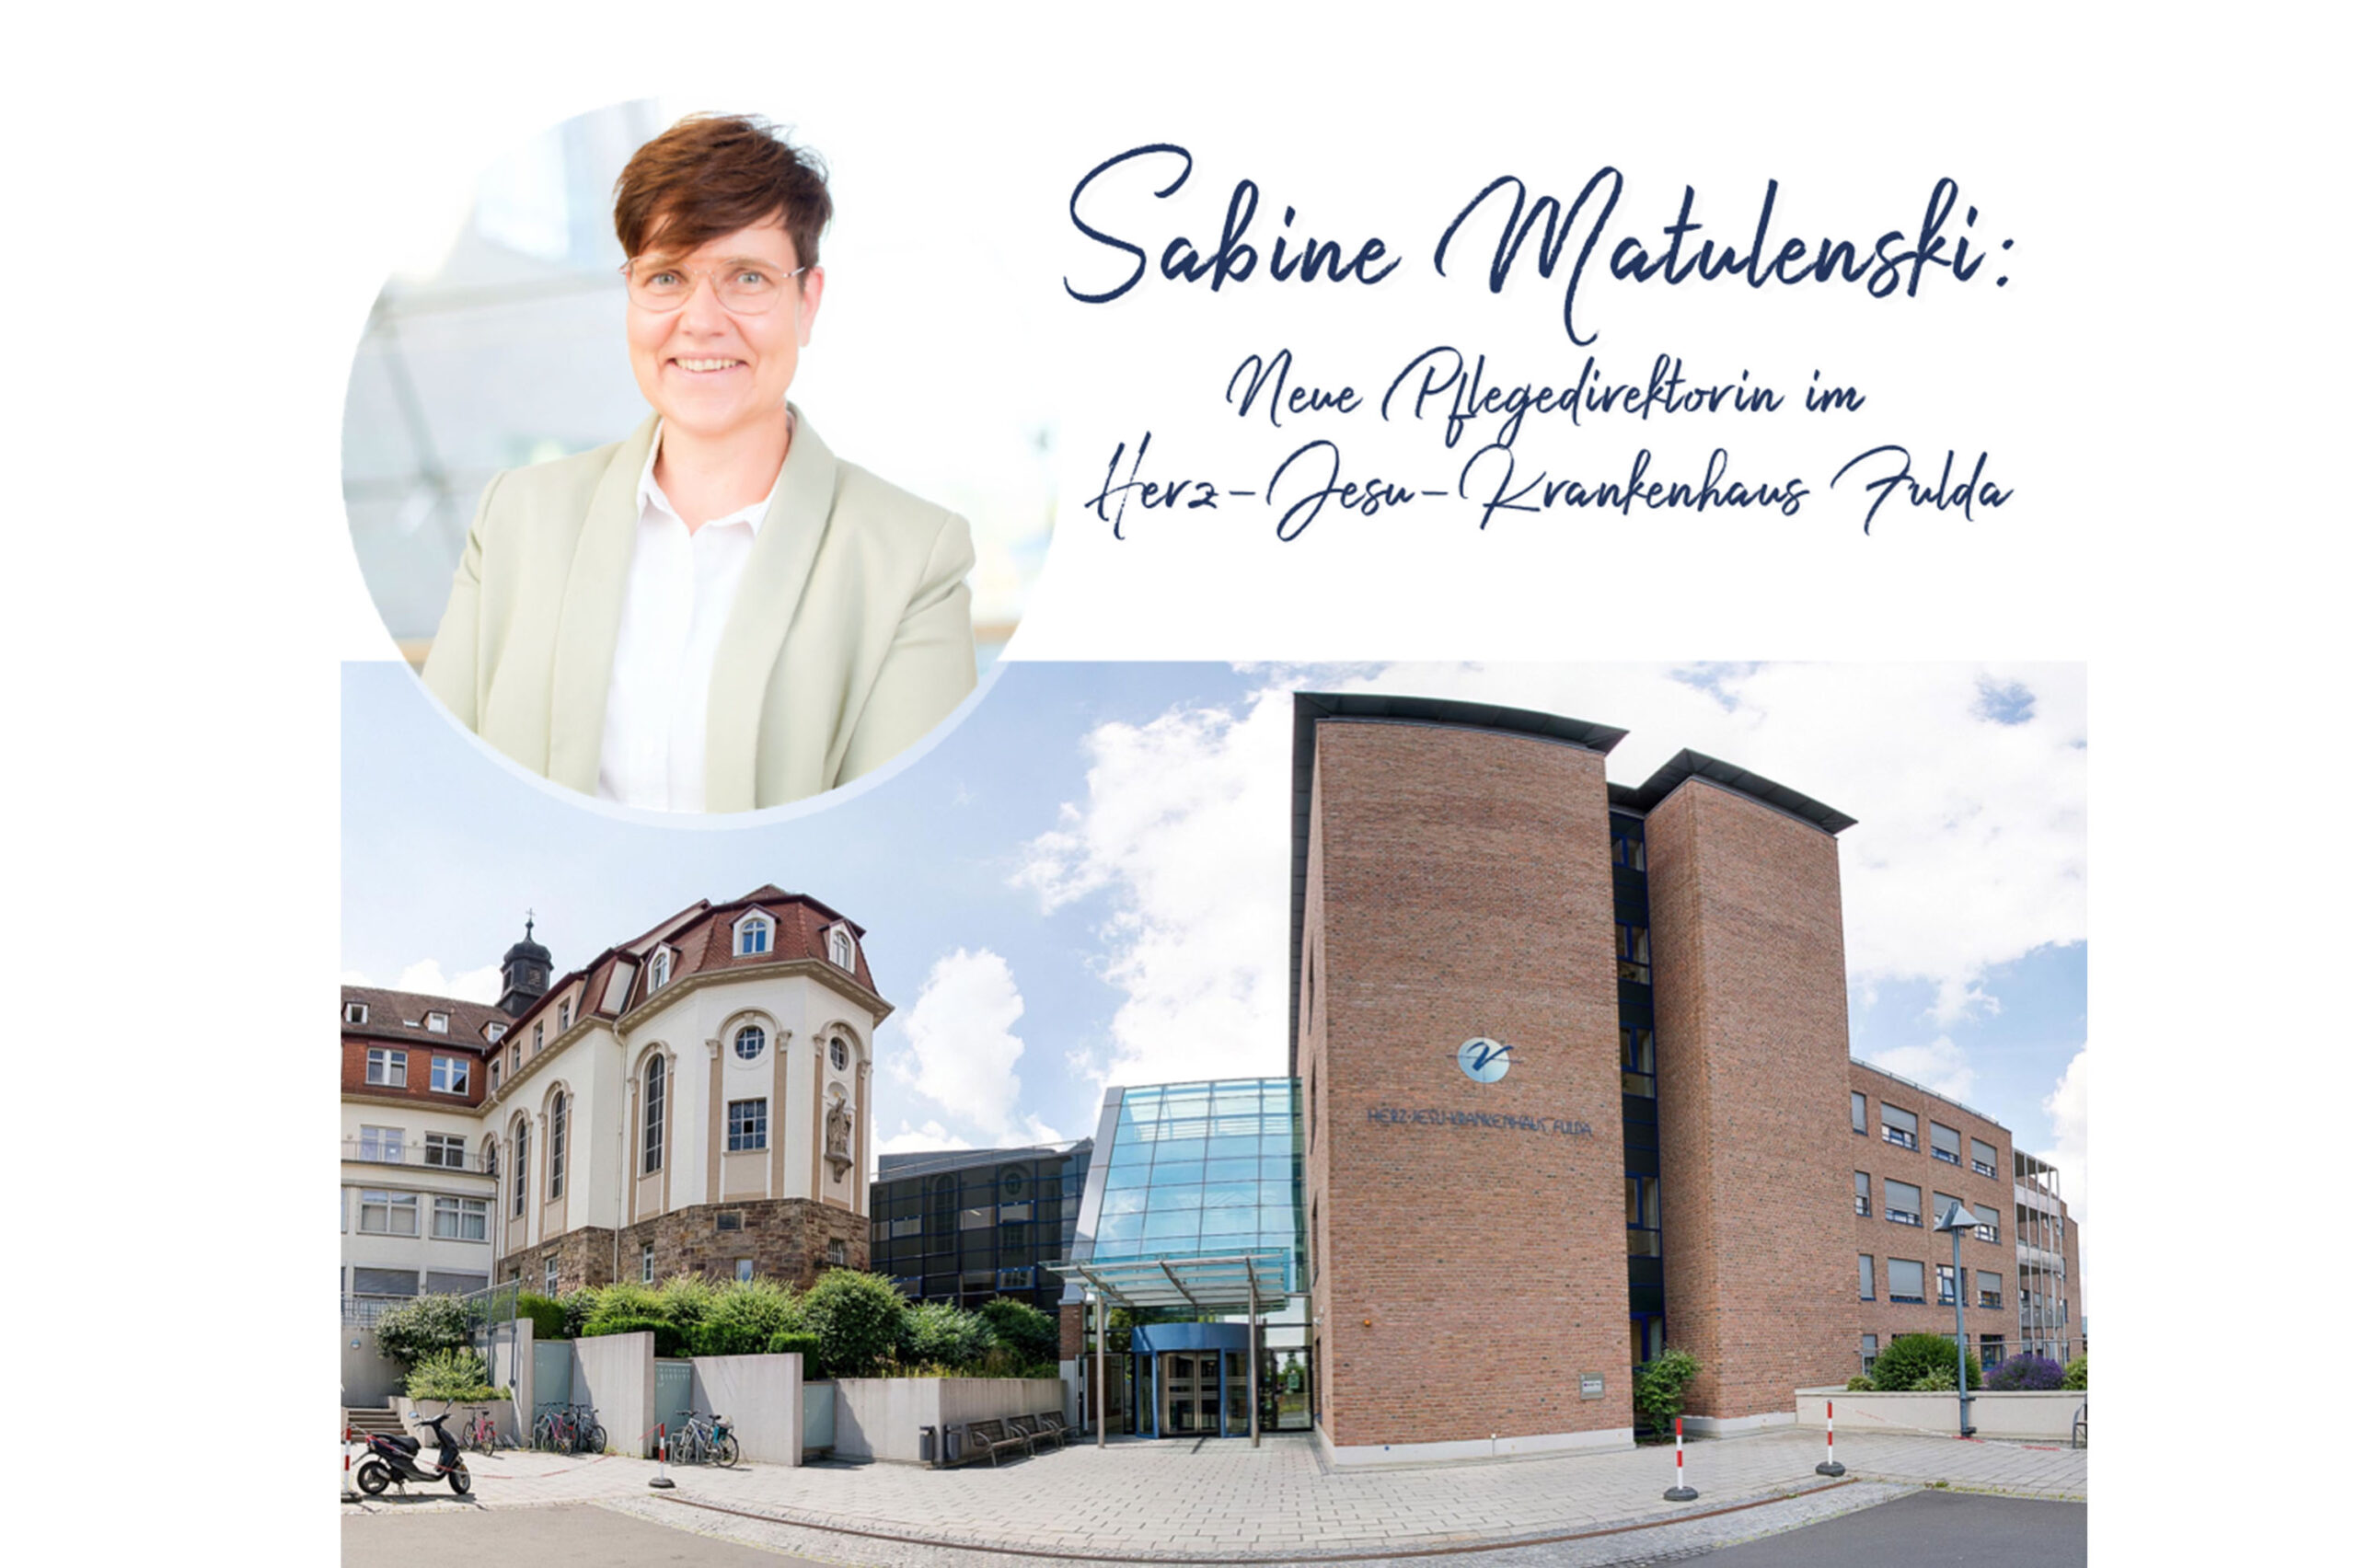 Sabine Matulenski ist neue Pflegedirektorin im Herz-Jesu-Krankenhaus Fulda